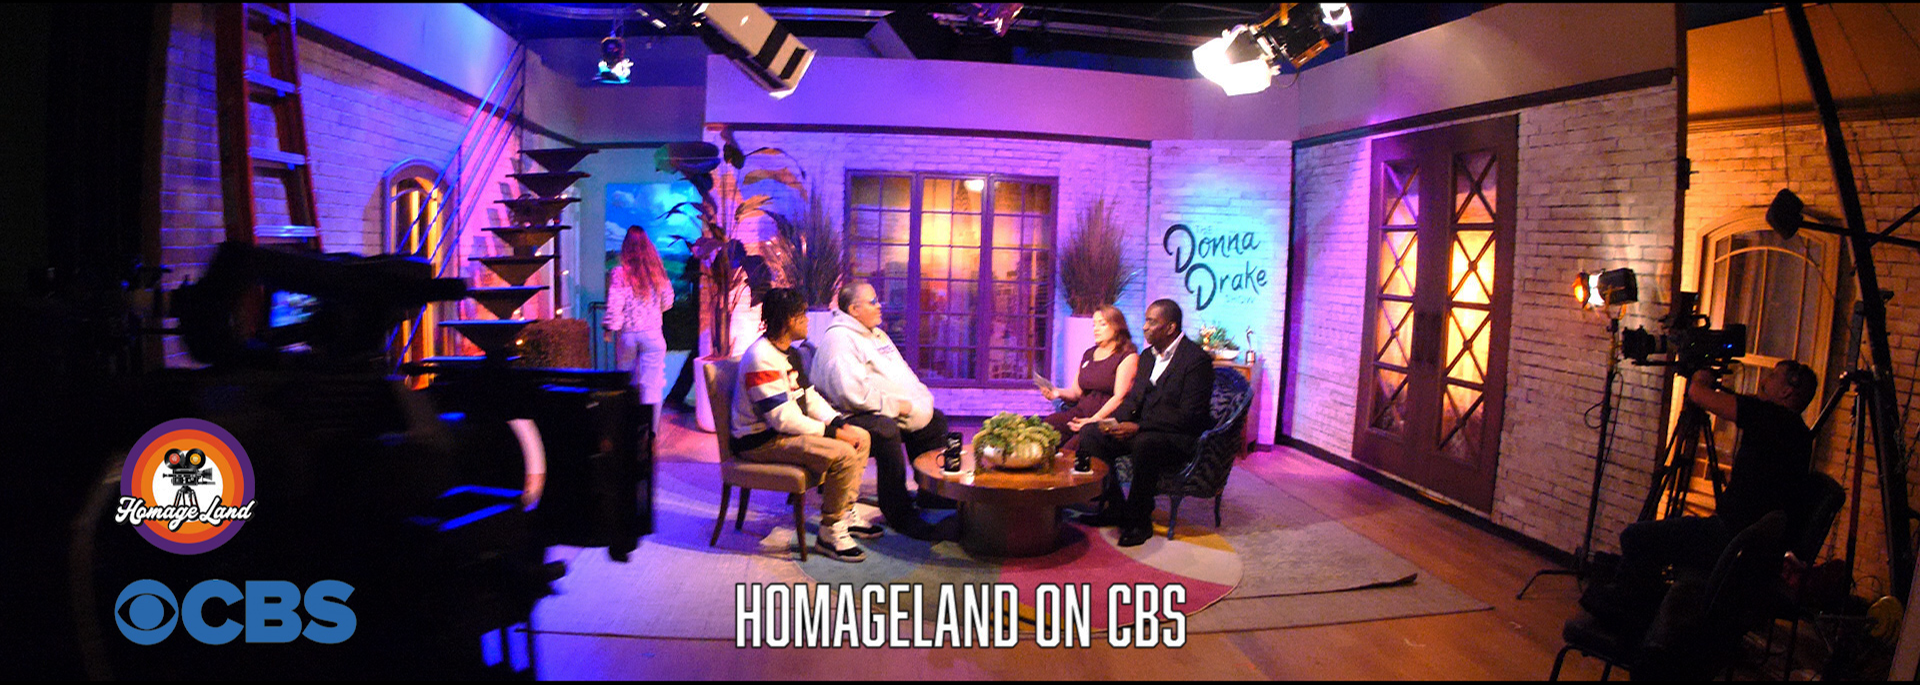 HOMAGELAND ON CBS channel